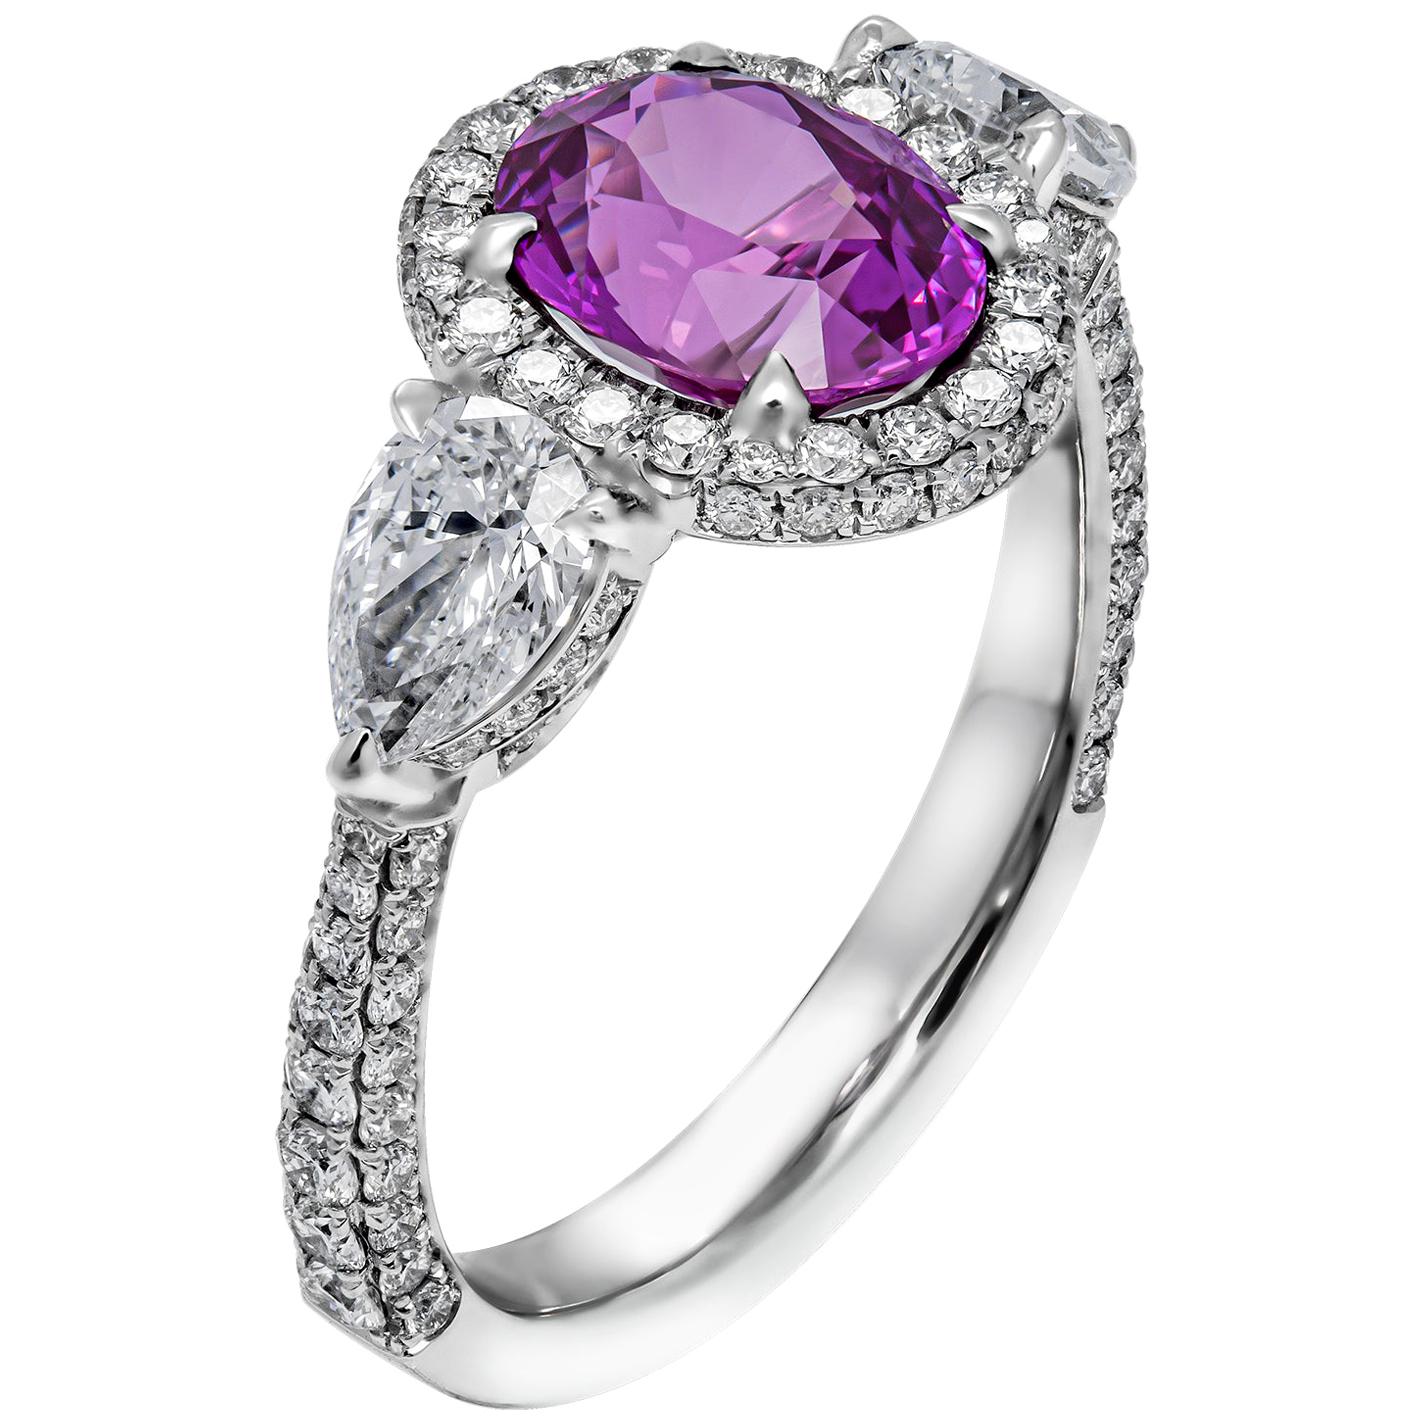 Dreisteiniger Ring mit 2,20 Karat ovalem rosa Saphir